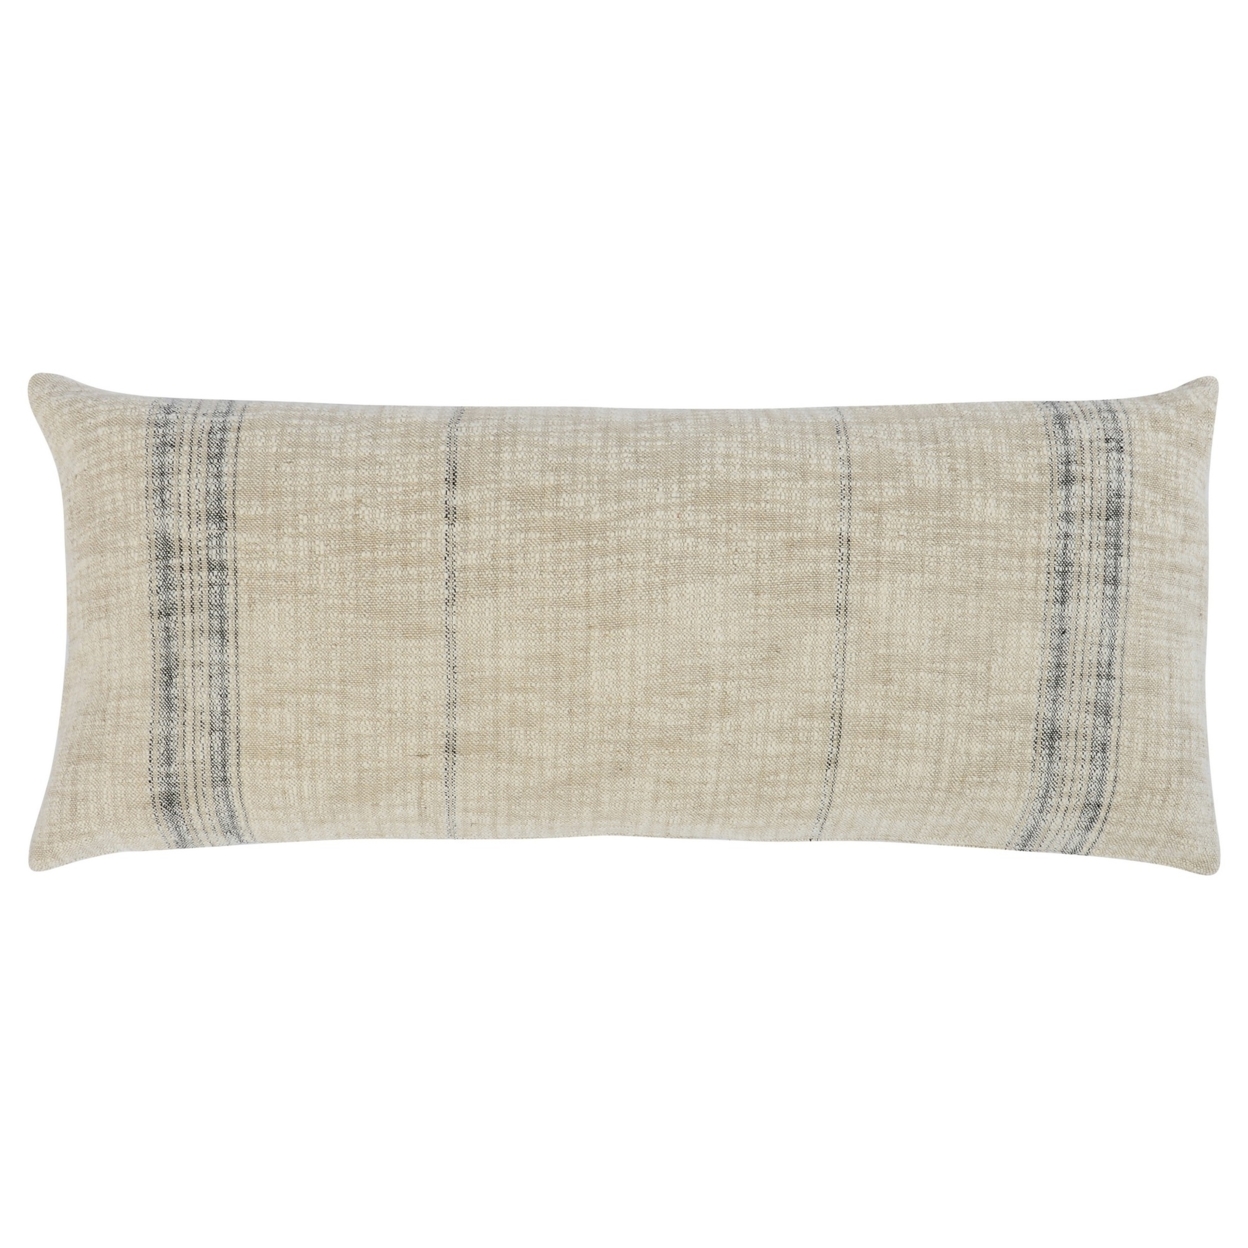 Tia 16 X 36 Lumbar Accent Throw Pillow, Woven Black Stripe, Beige Linen- Saltoro Sherpi